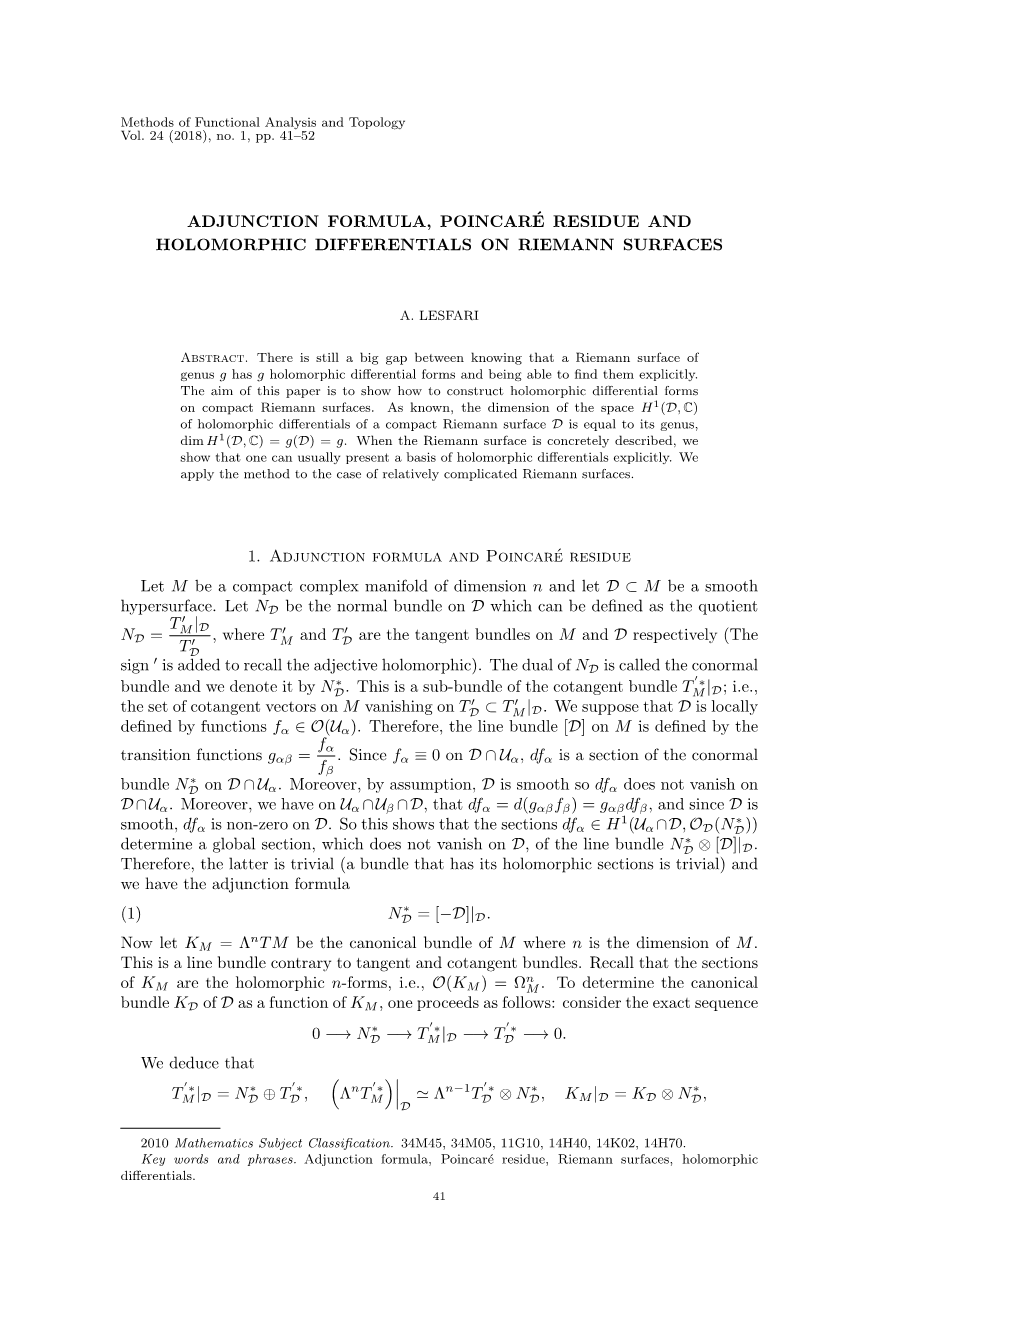 Adjunction Formula, Poincaré Residue and Holomorphic